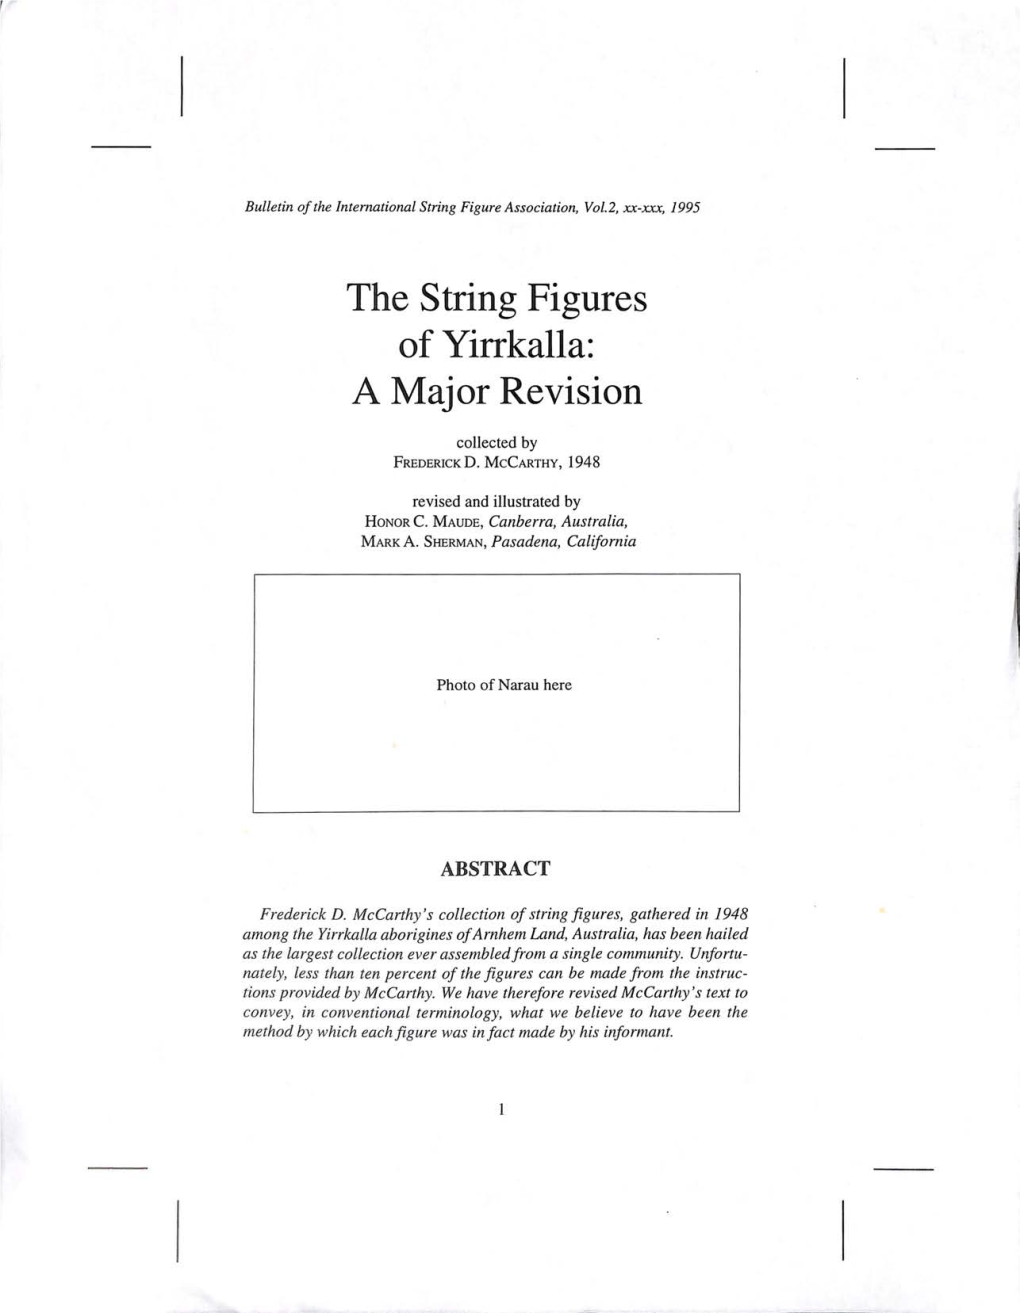 The String Figures of Yirrkalla: a Major Revision